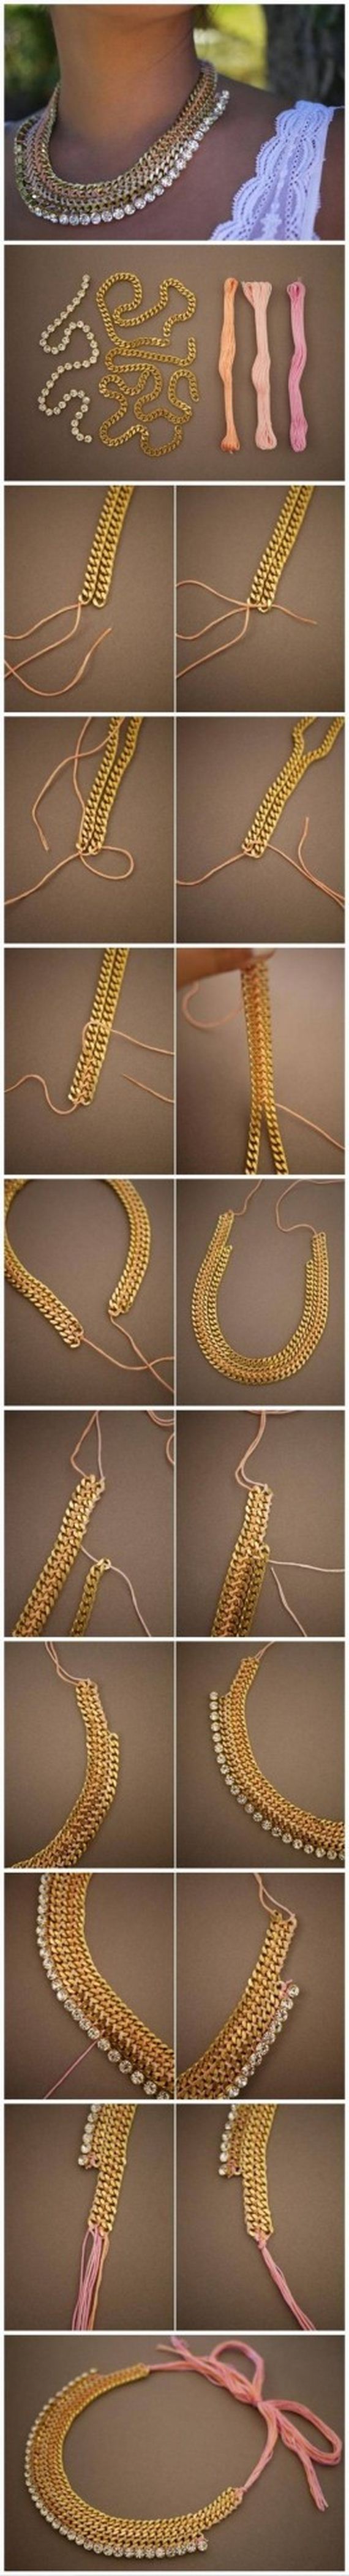 17-diy-statement-necklace-jewelry-tutorial-ideas